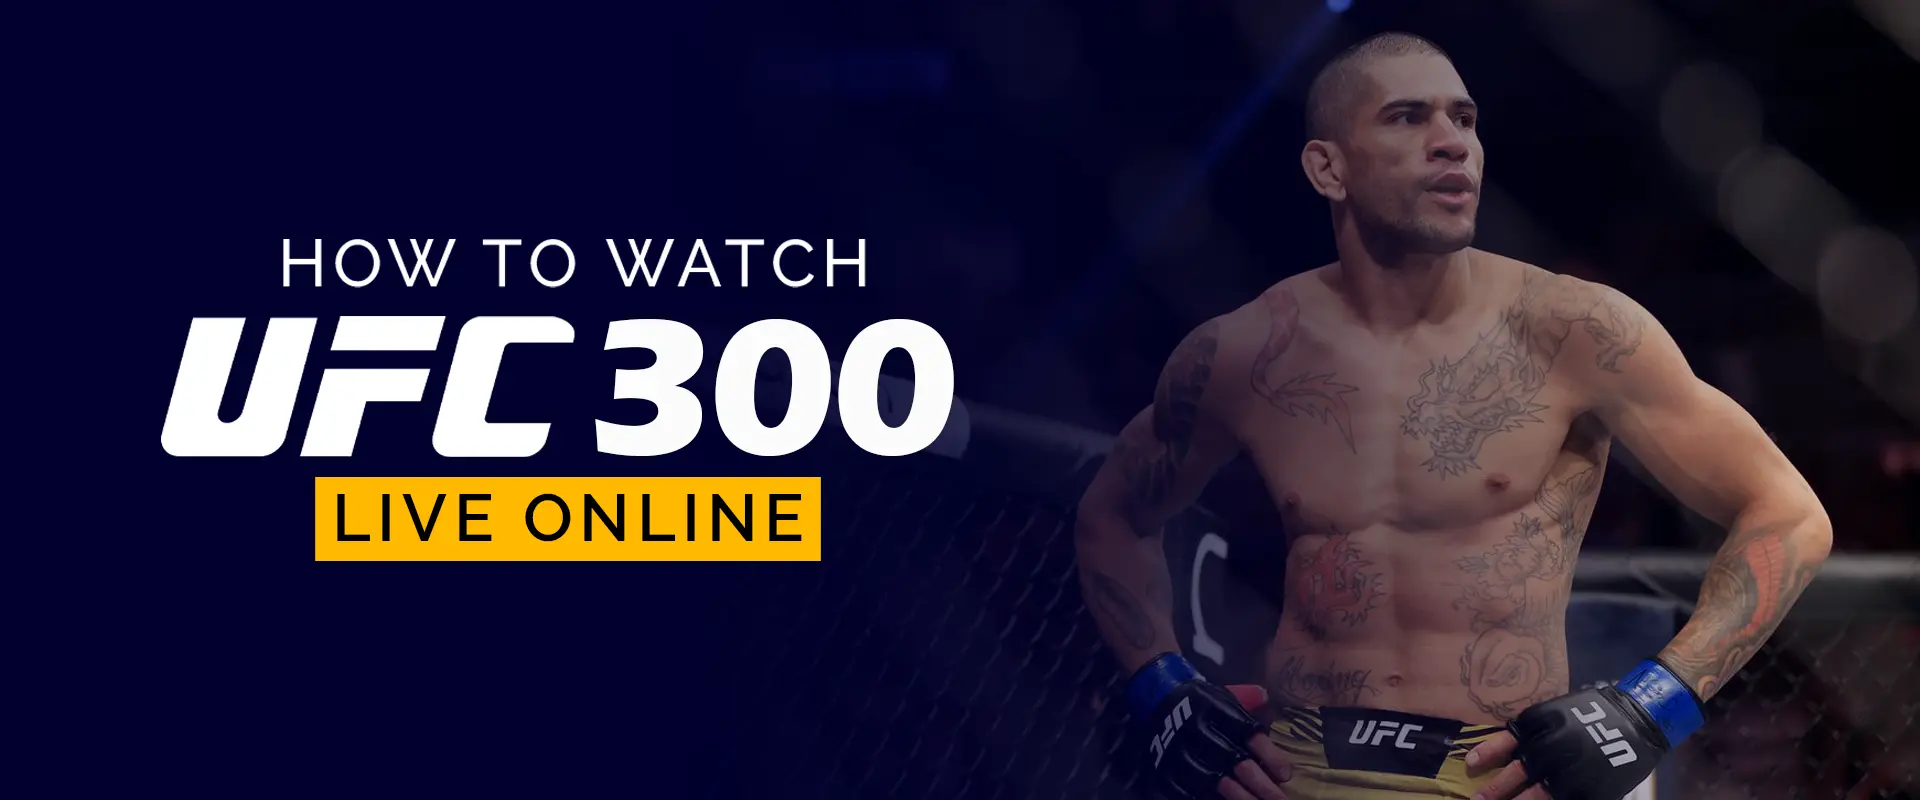 Hur man tittar på UFC 300 Live Online